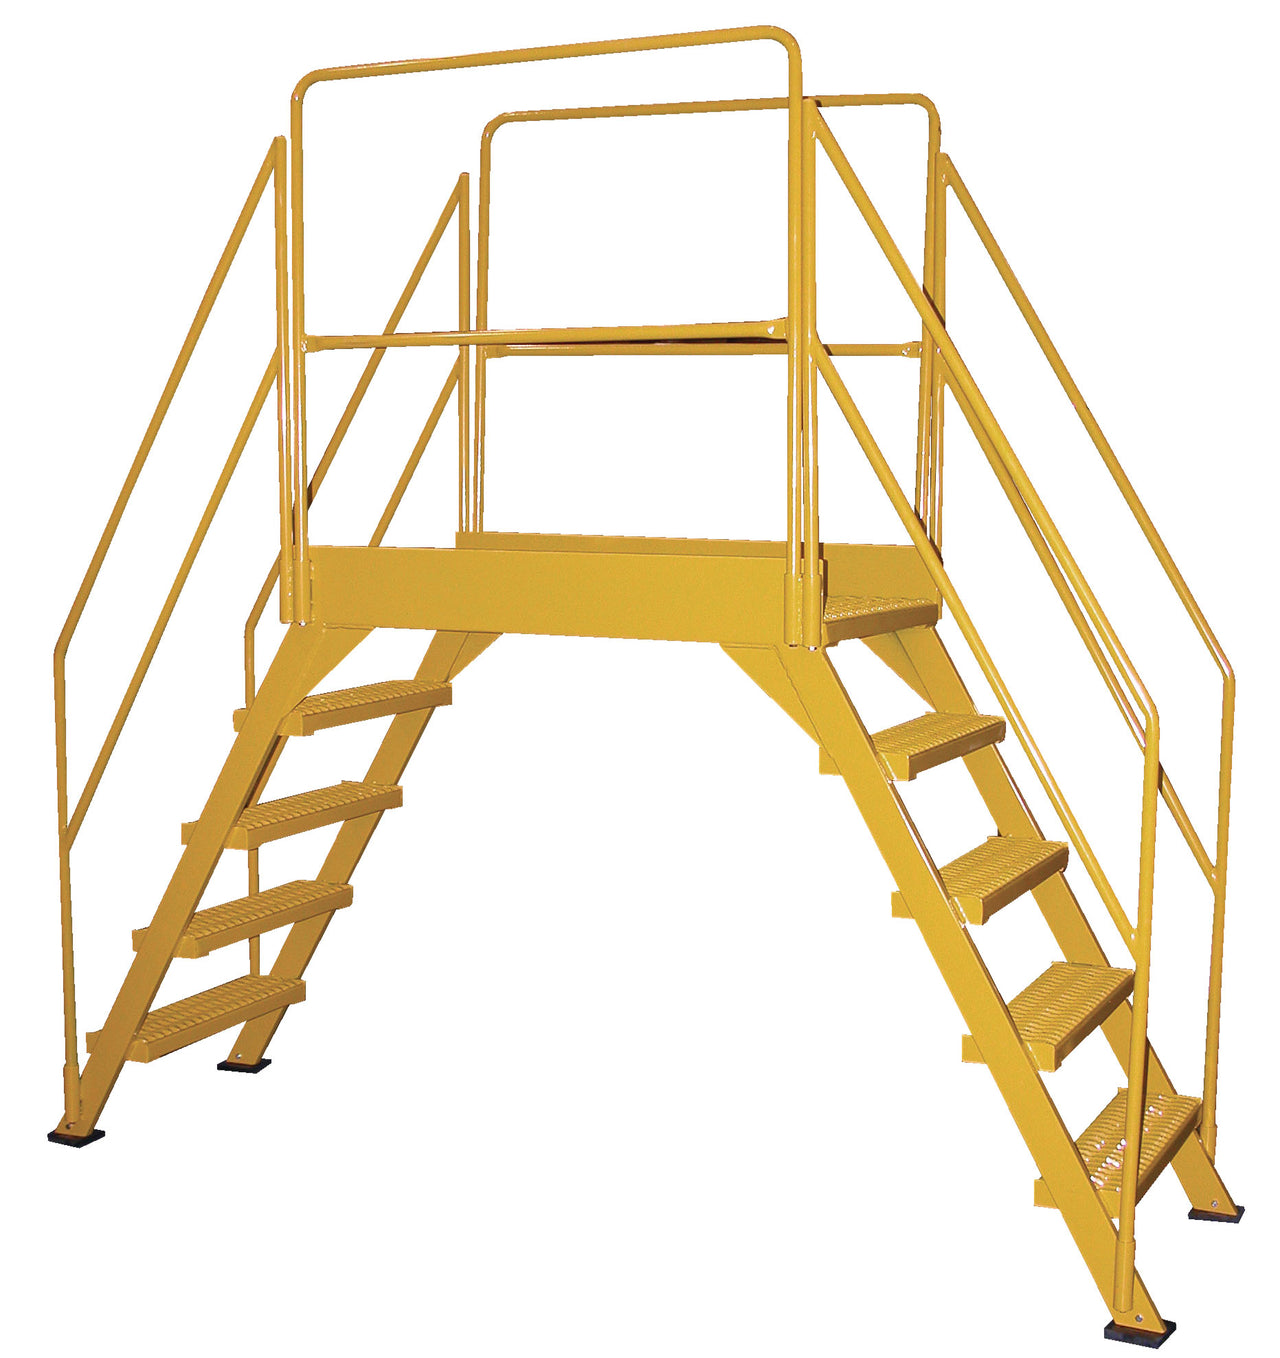 4 Step Cross-Over Ladder w/ 36" Deck